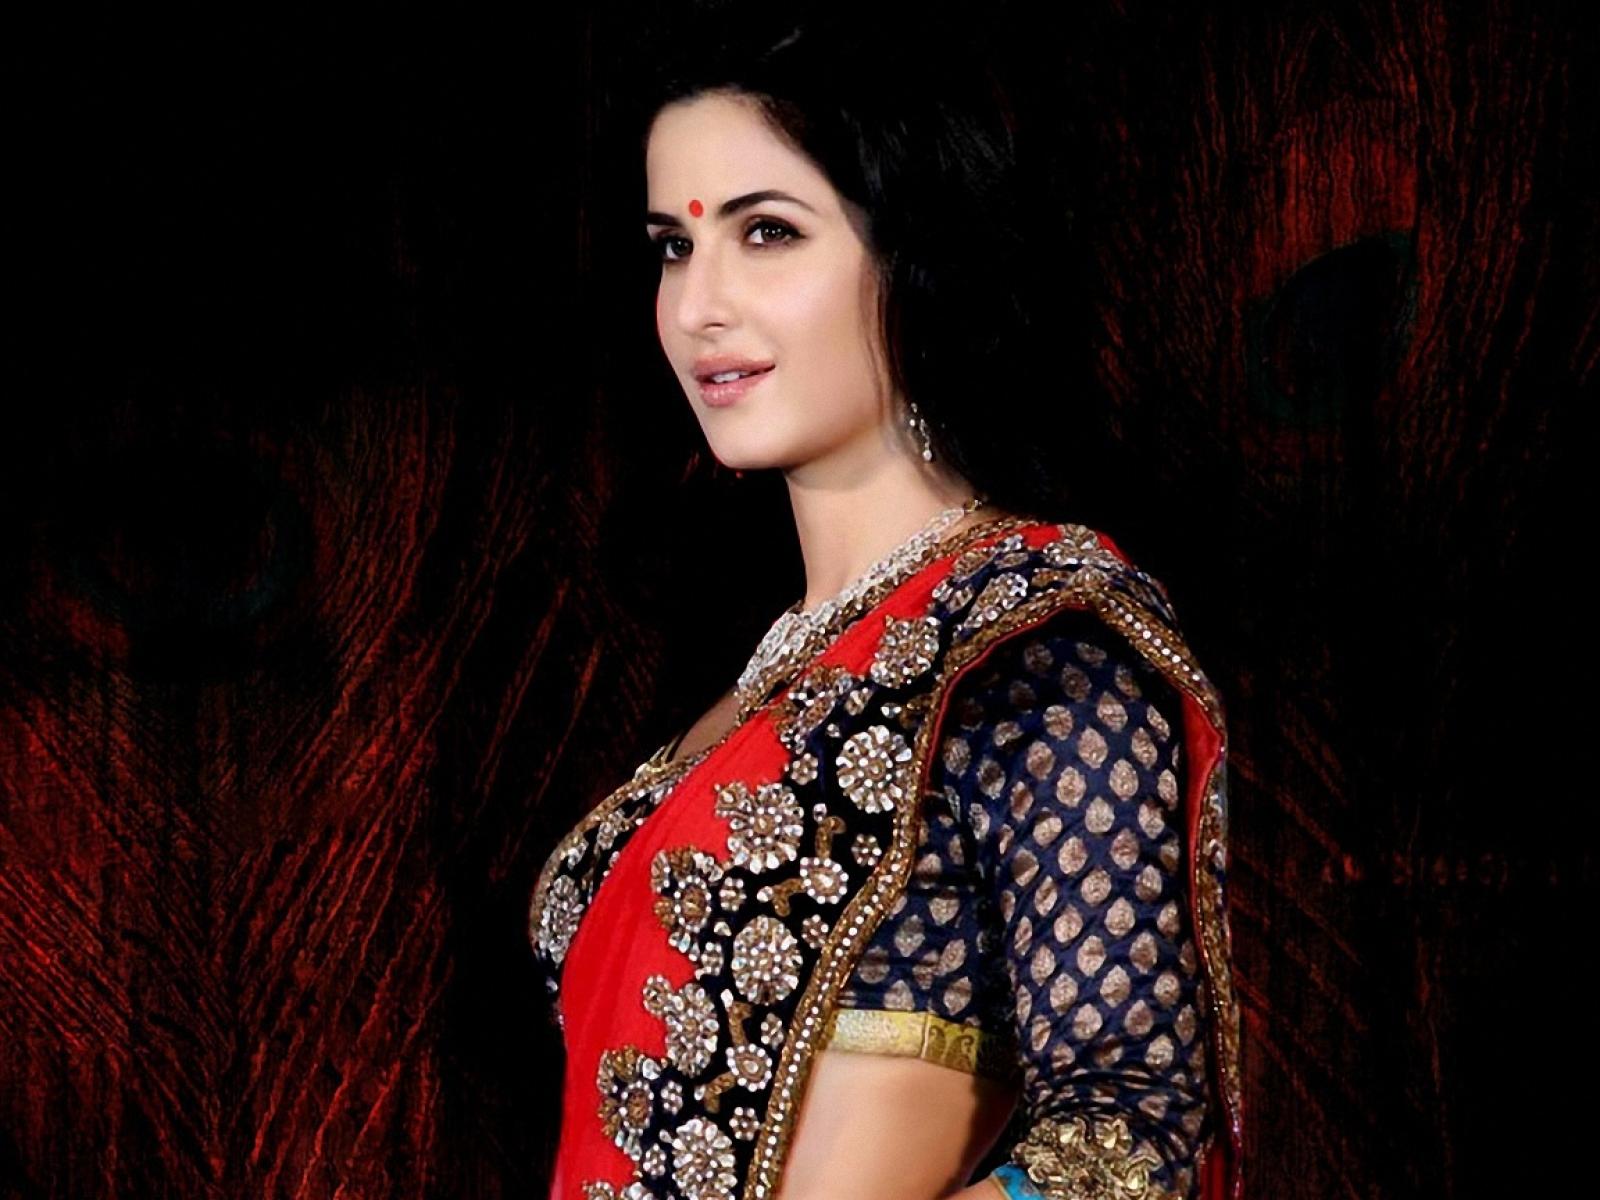 The Look Of These Bollywood Actresses In Saree - Katrina Kaif Full Hd - HD Wallpaper 